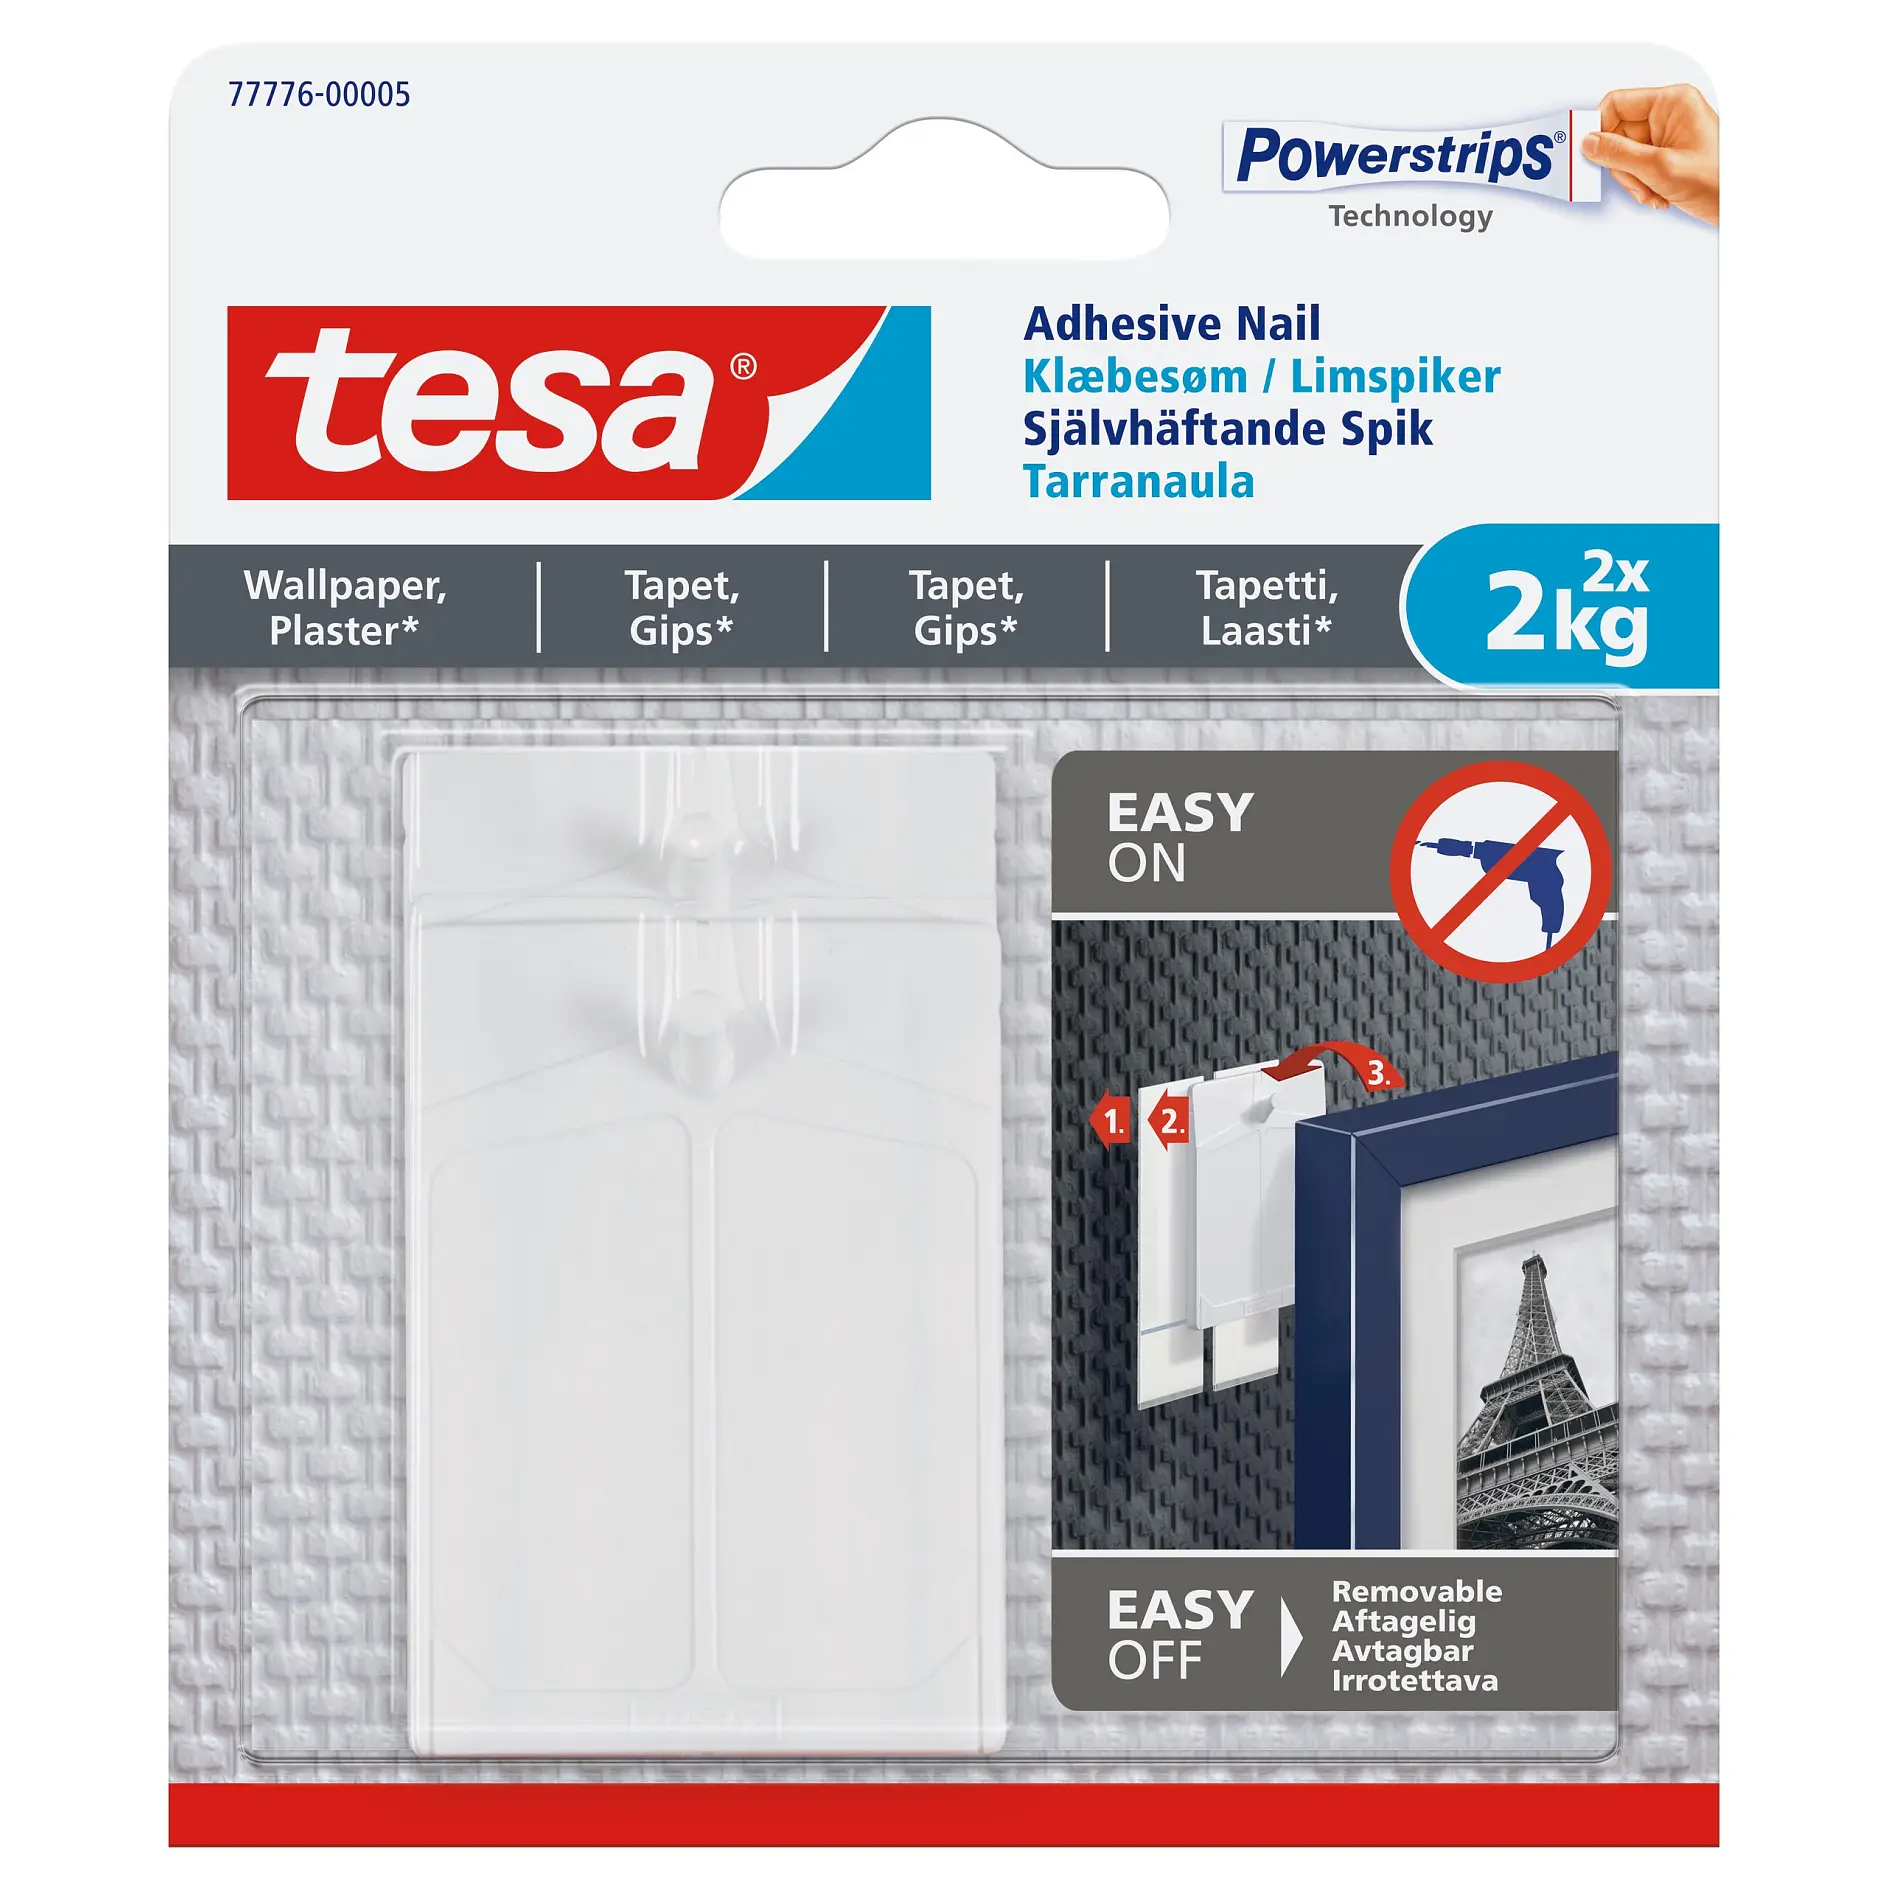 [en-en] tesa Smart Mounting system, adhesive nail for wallpaper, 2x2kg